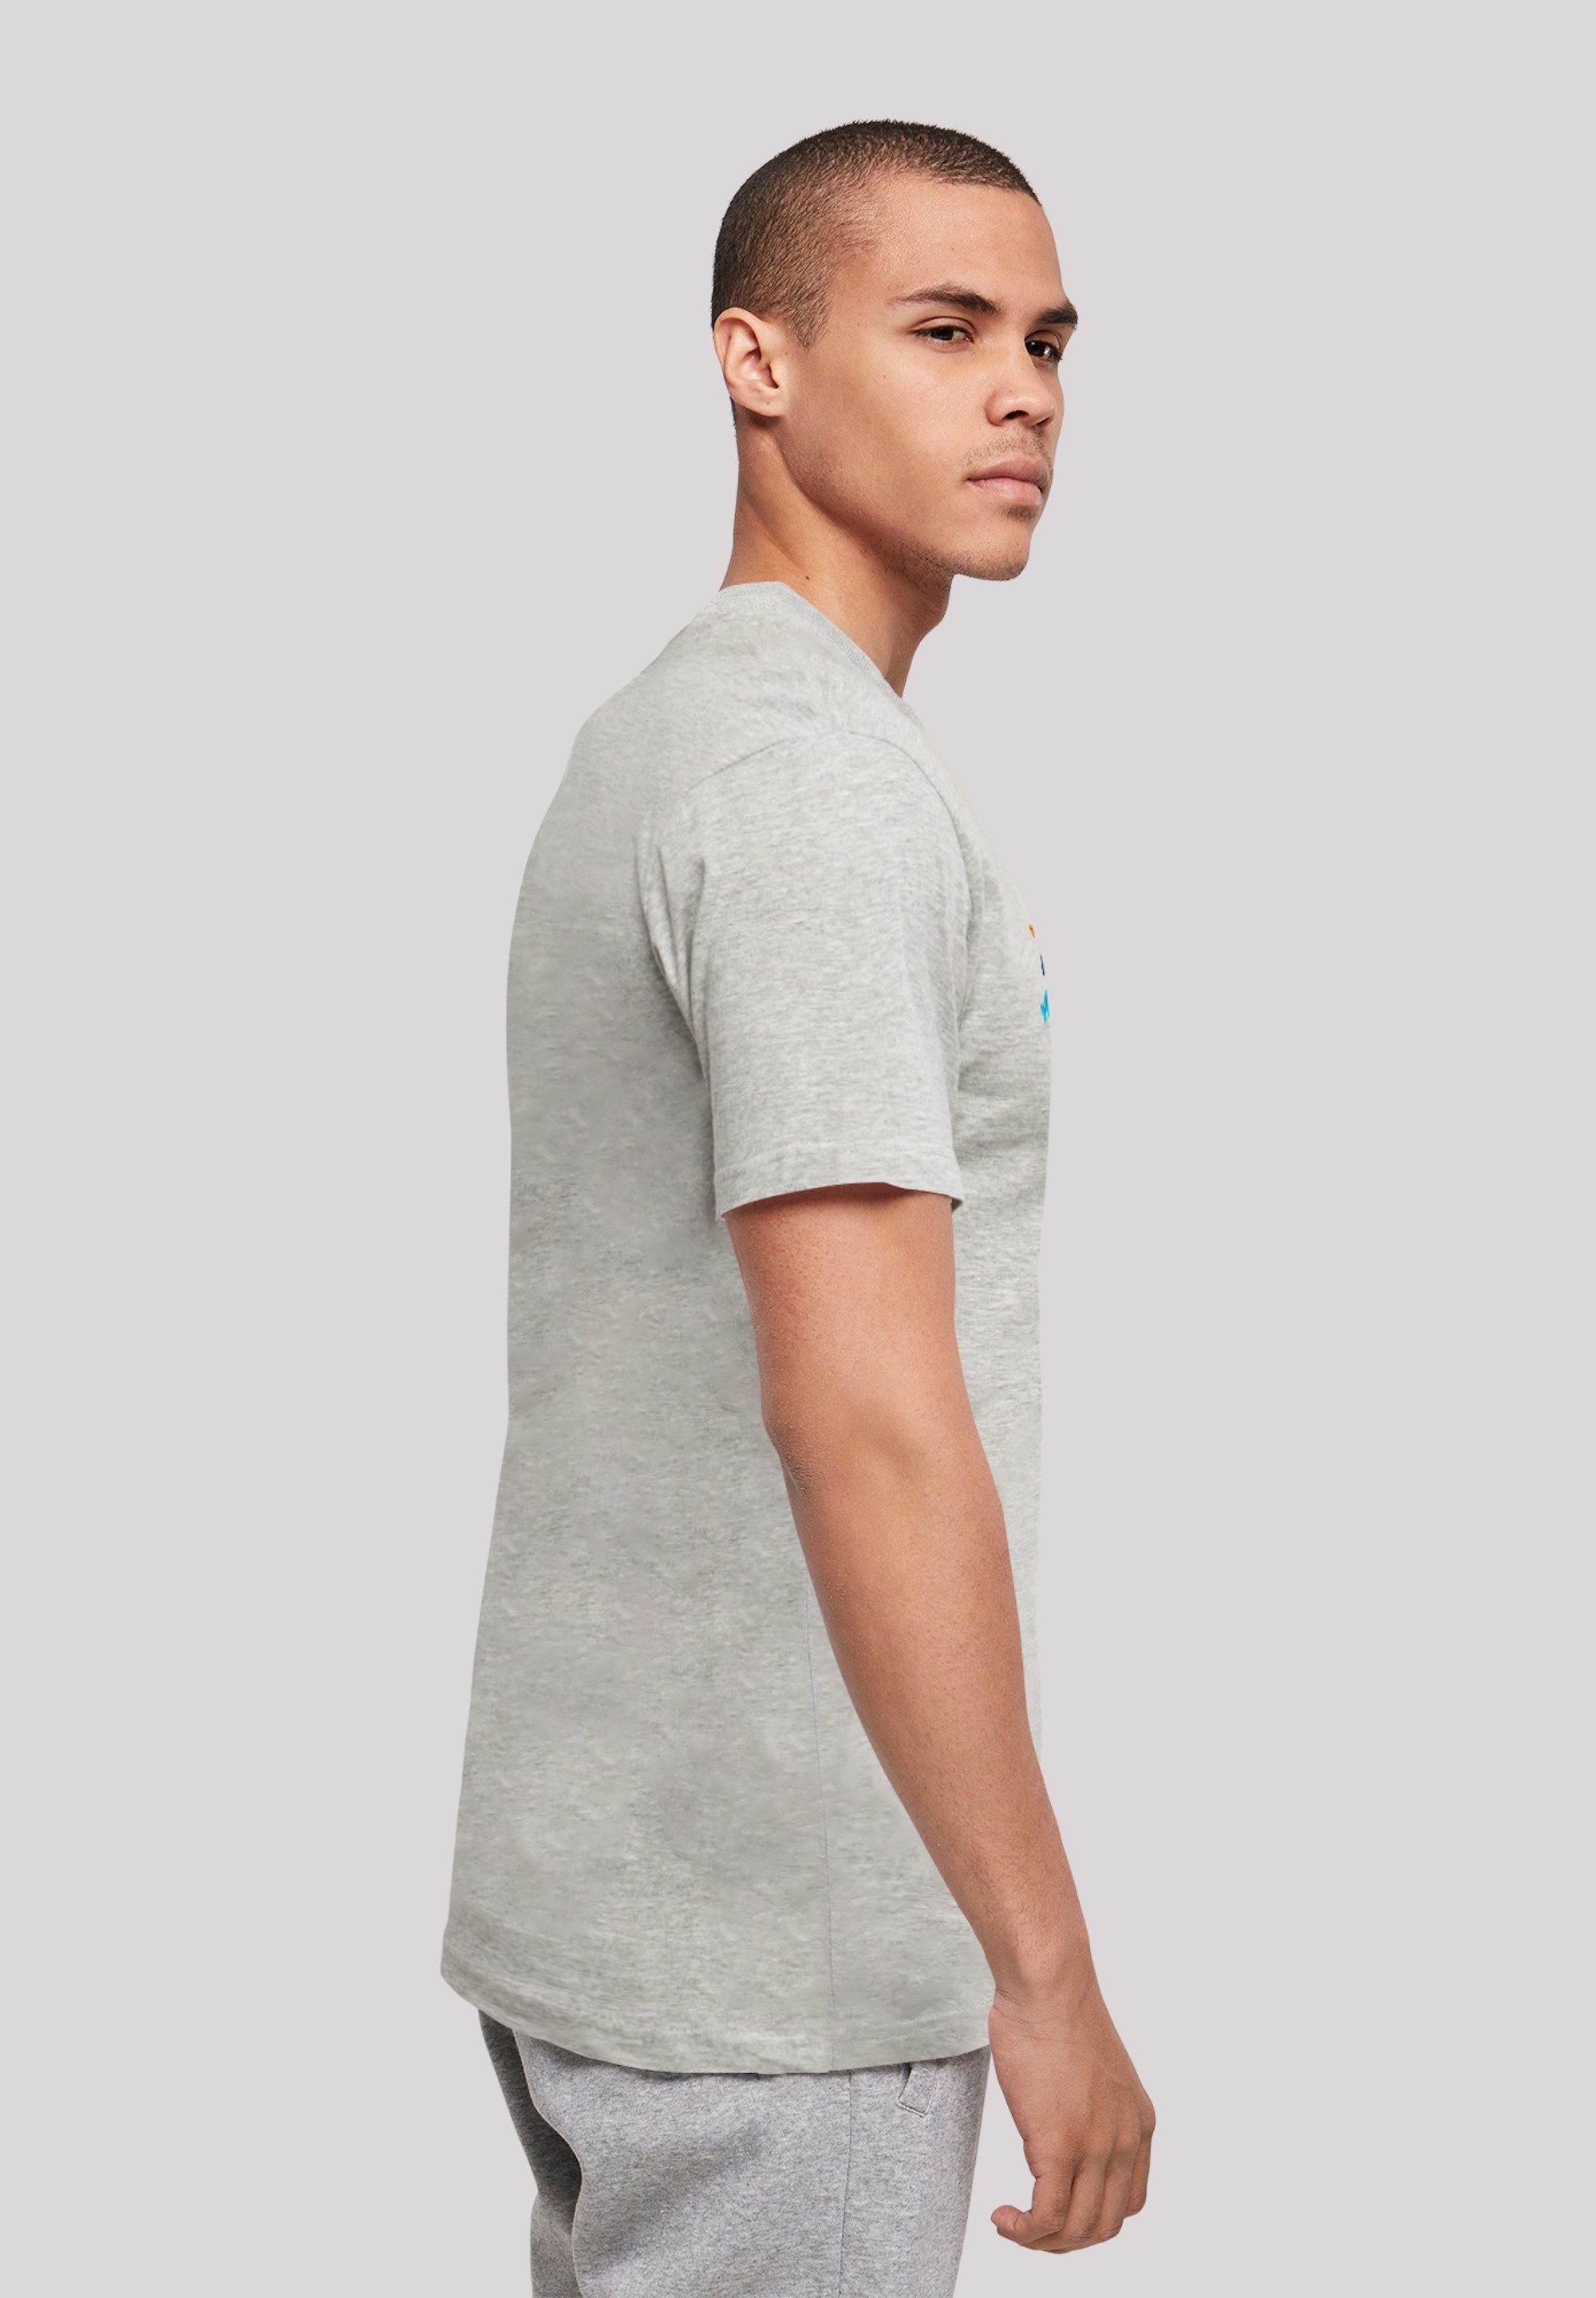 F4NT4STIC T-Shirt Schmetterling Silhouette Print TEE heather grey UNISEX